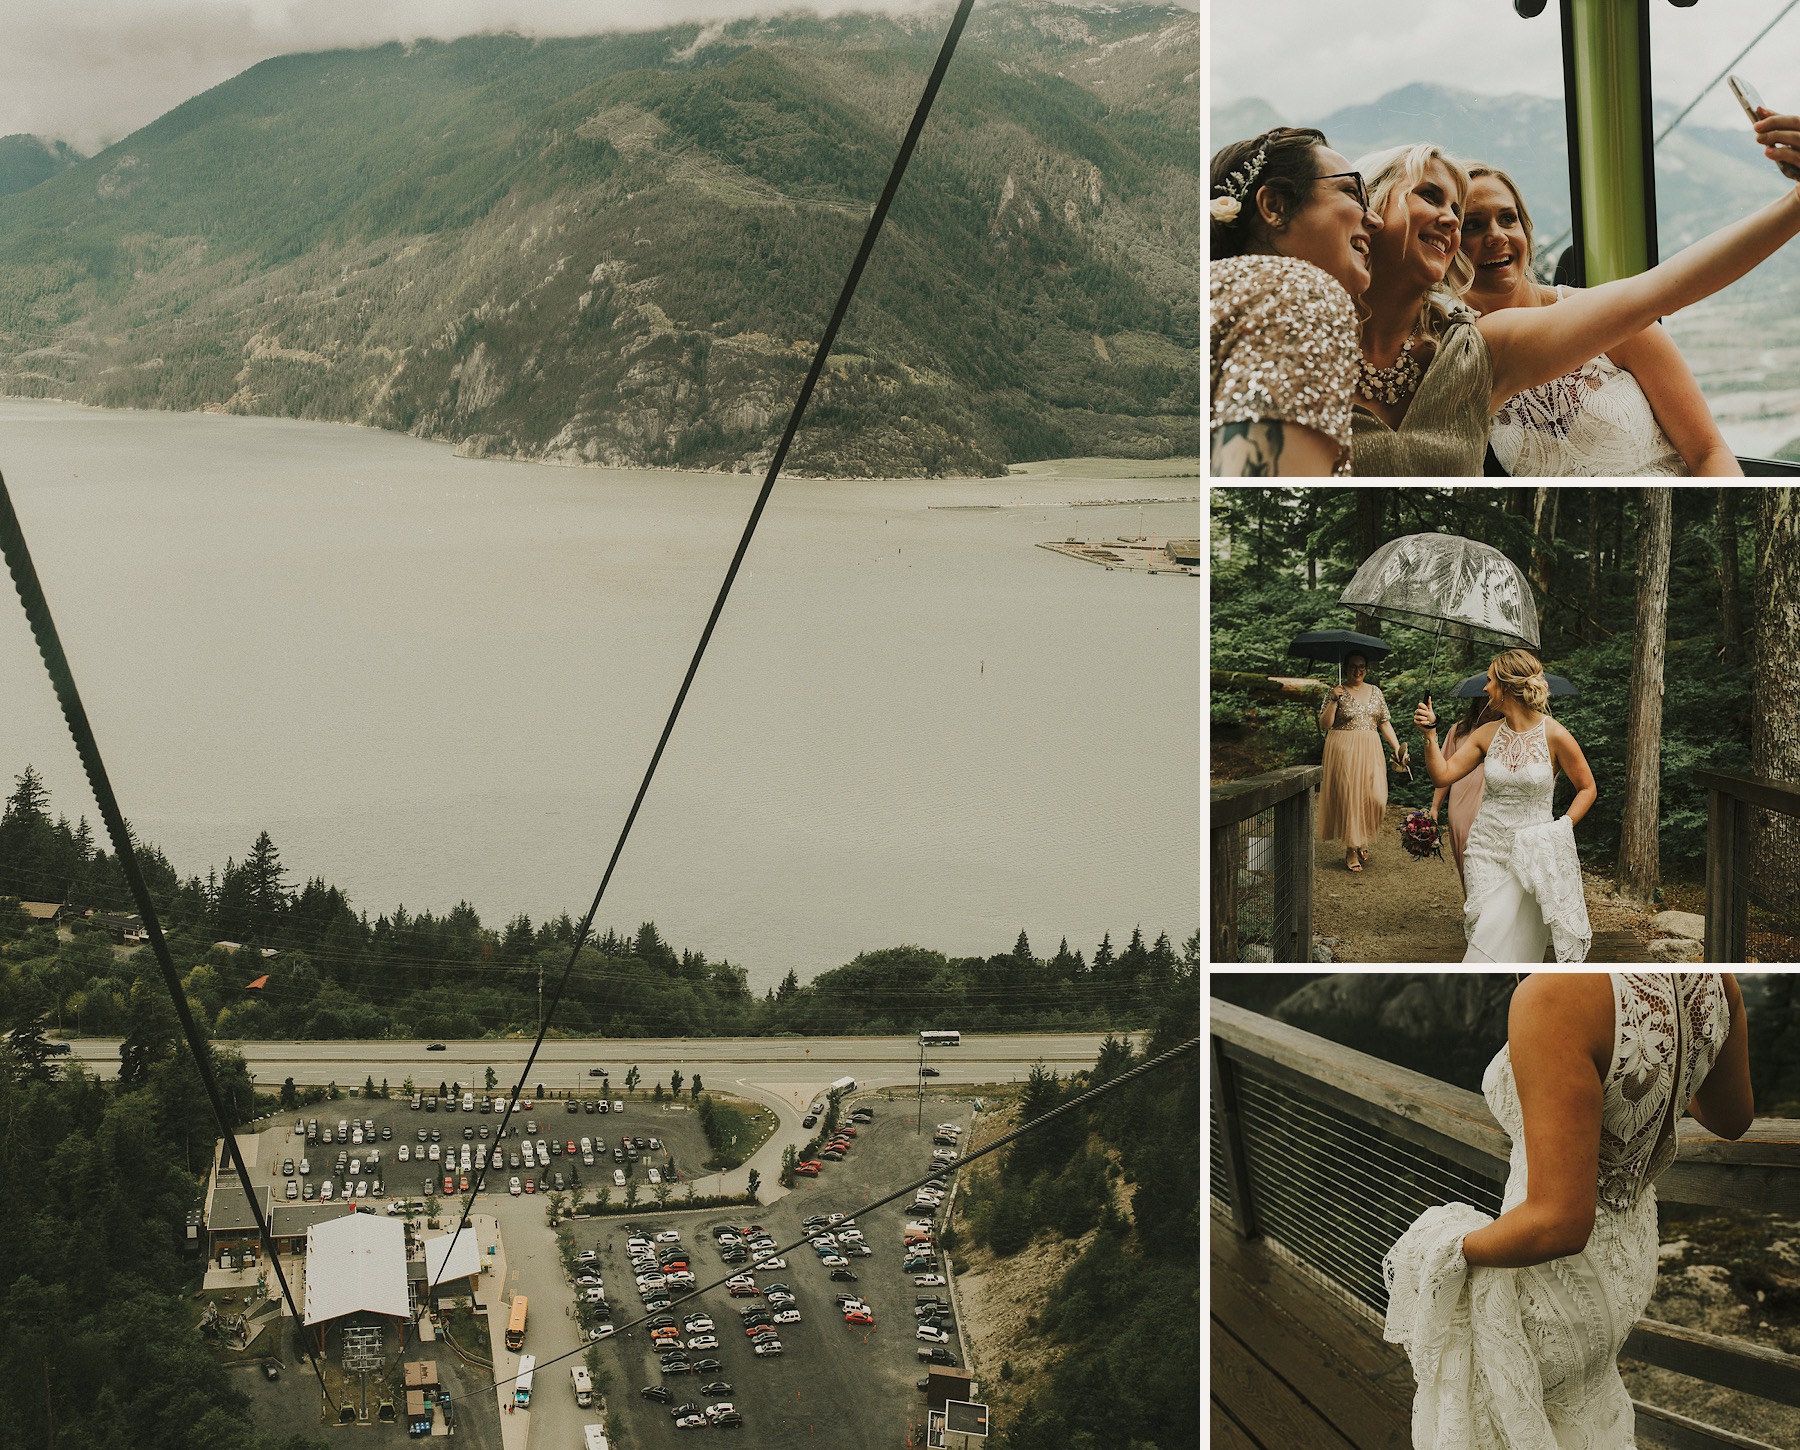 A Sea to Sky Gondola Squamish summer wedding pnw